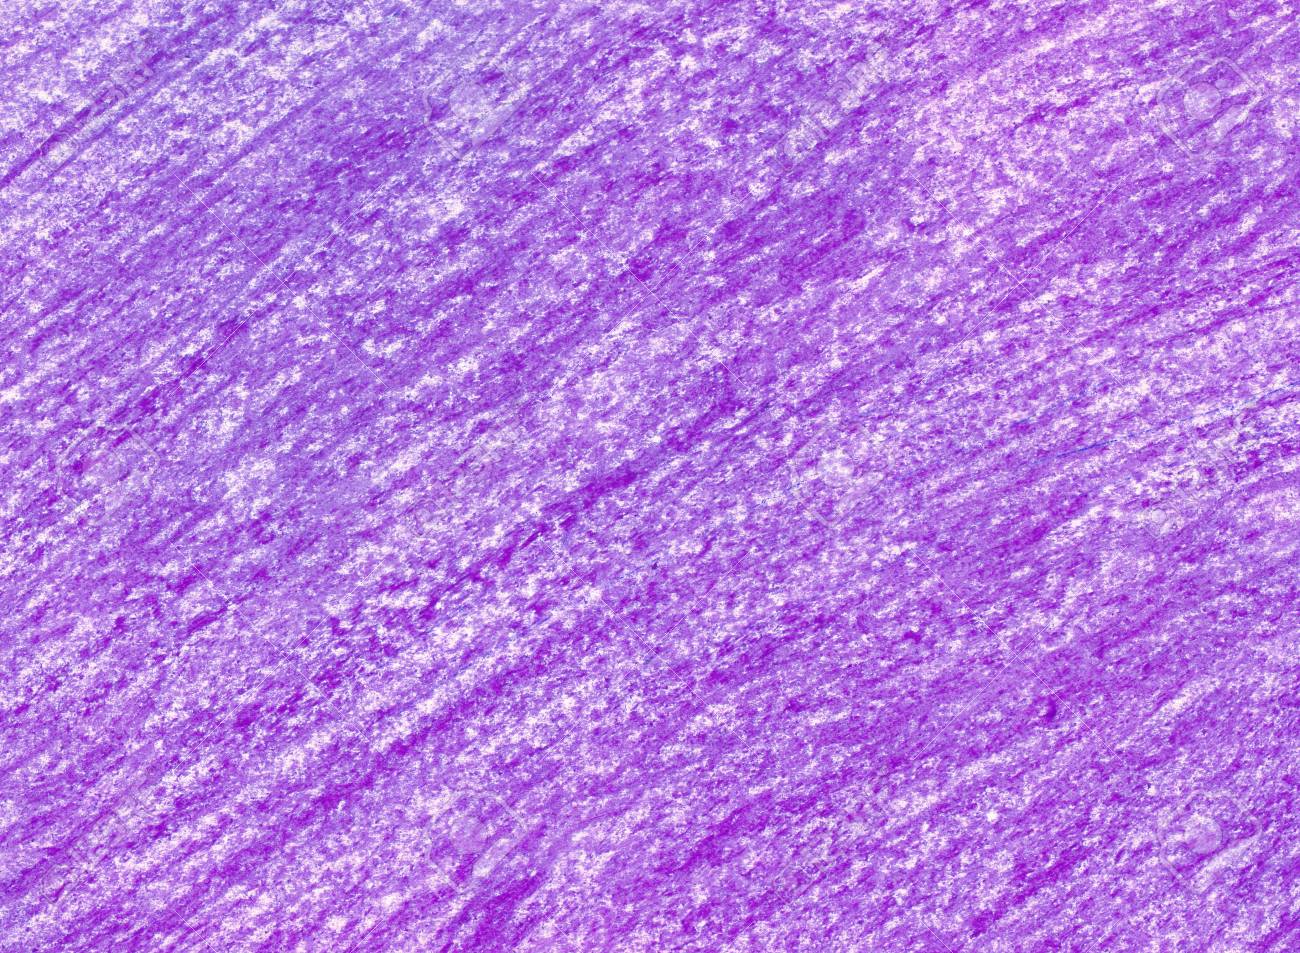 Crayon Scribble Background Purple Pastel Spot Wax